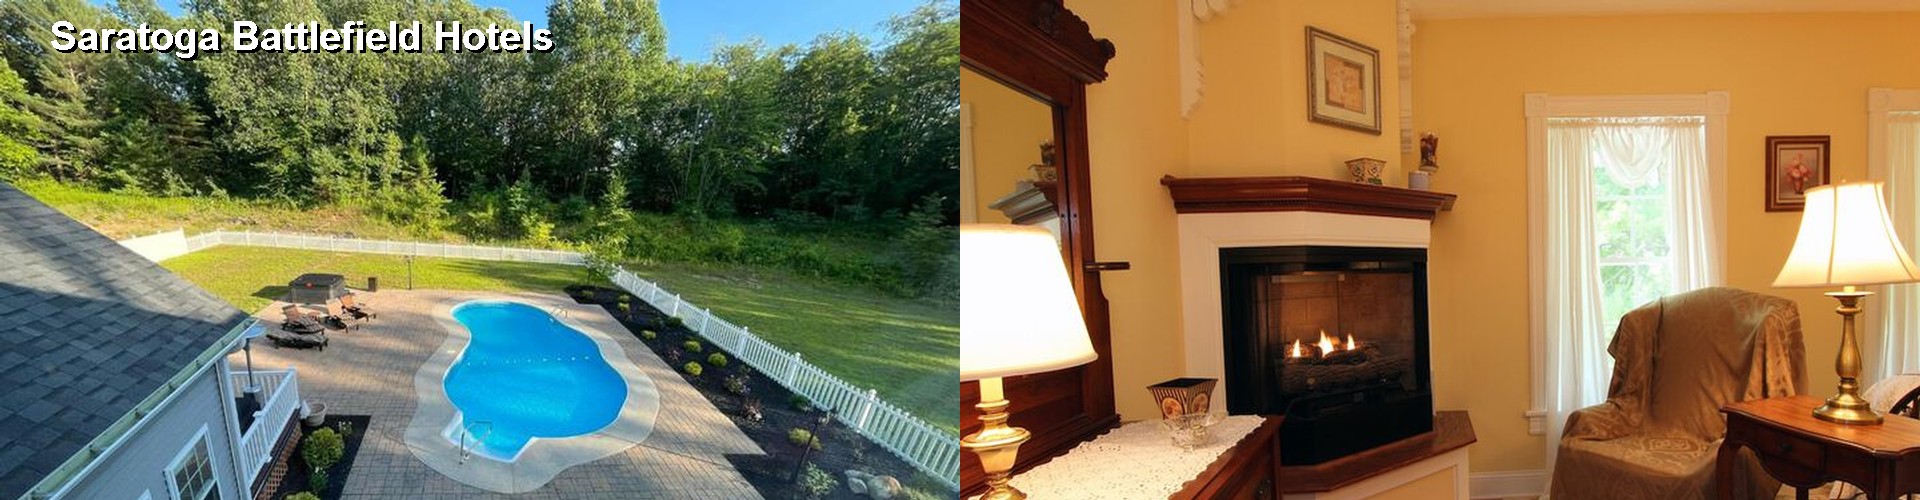 5 Best Hotels near Saratoga Battlefield